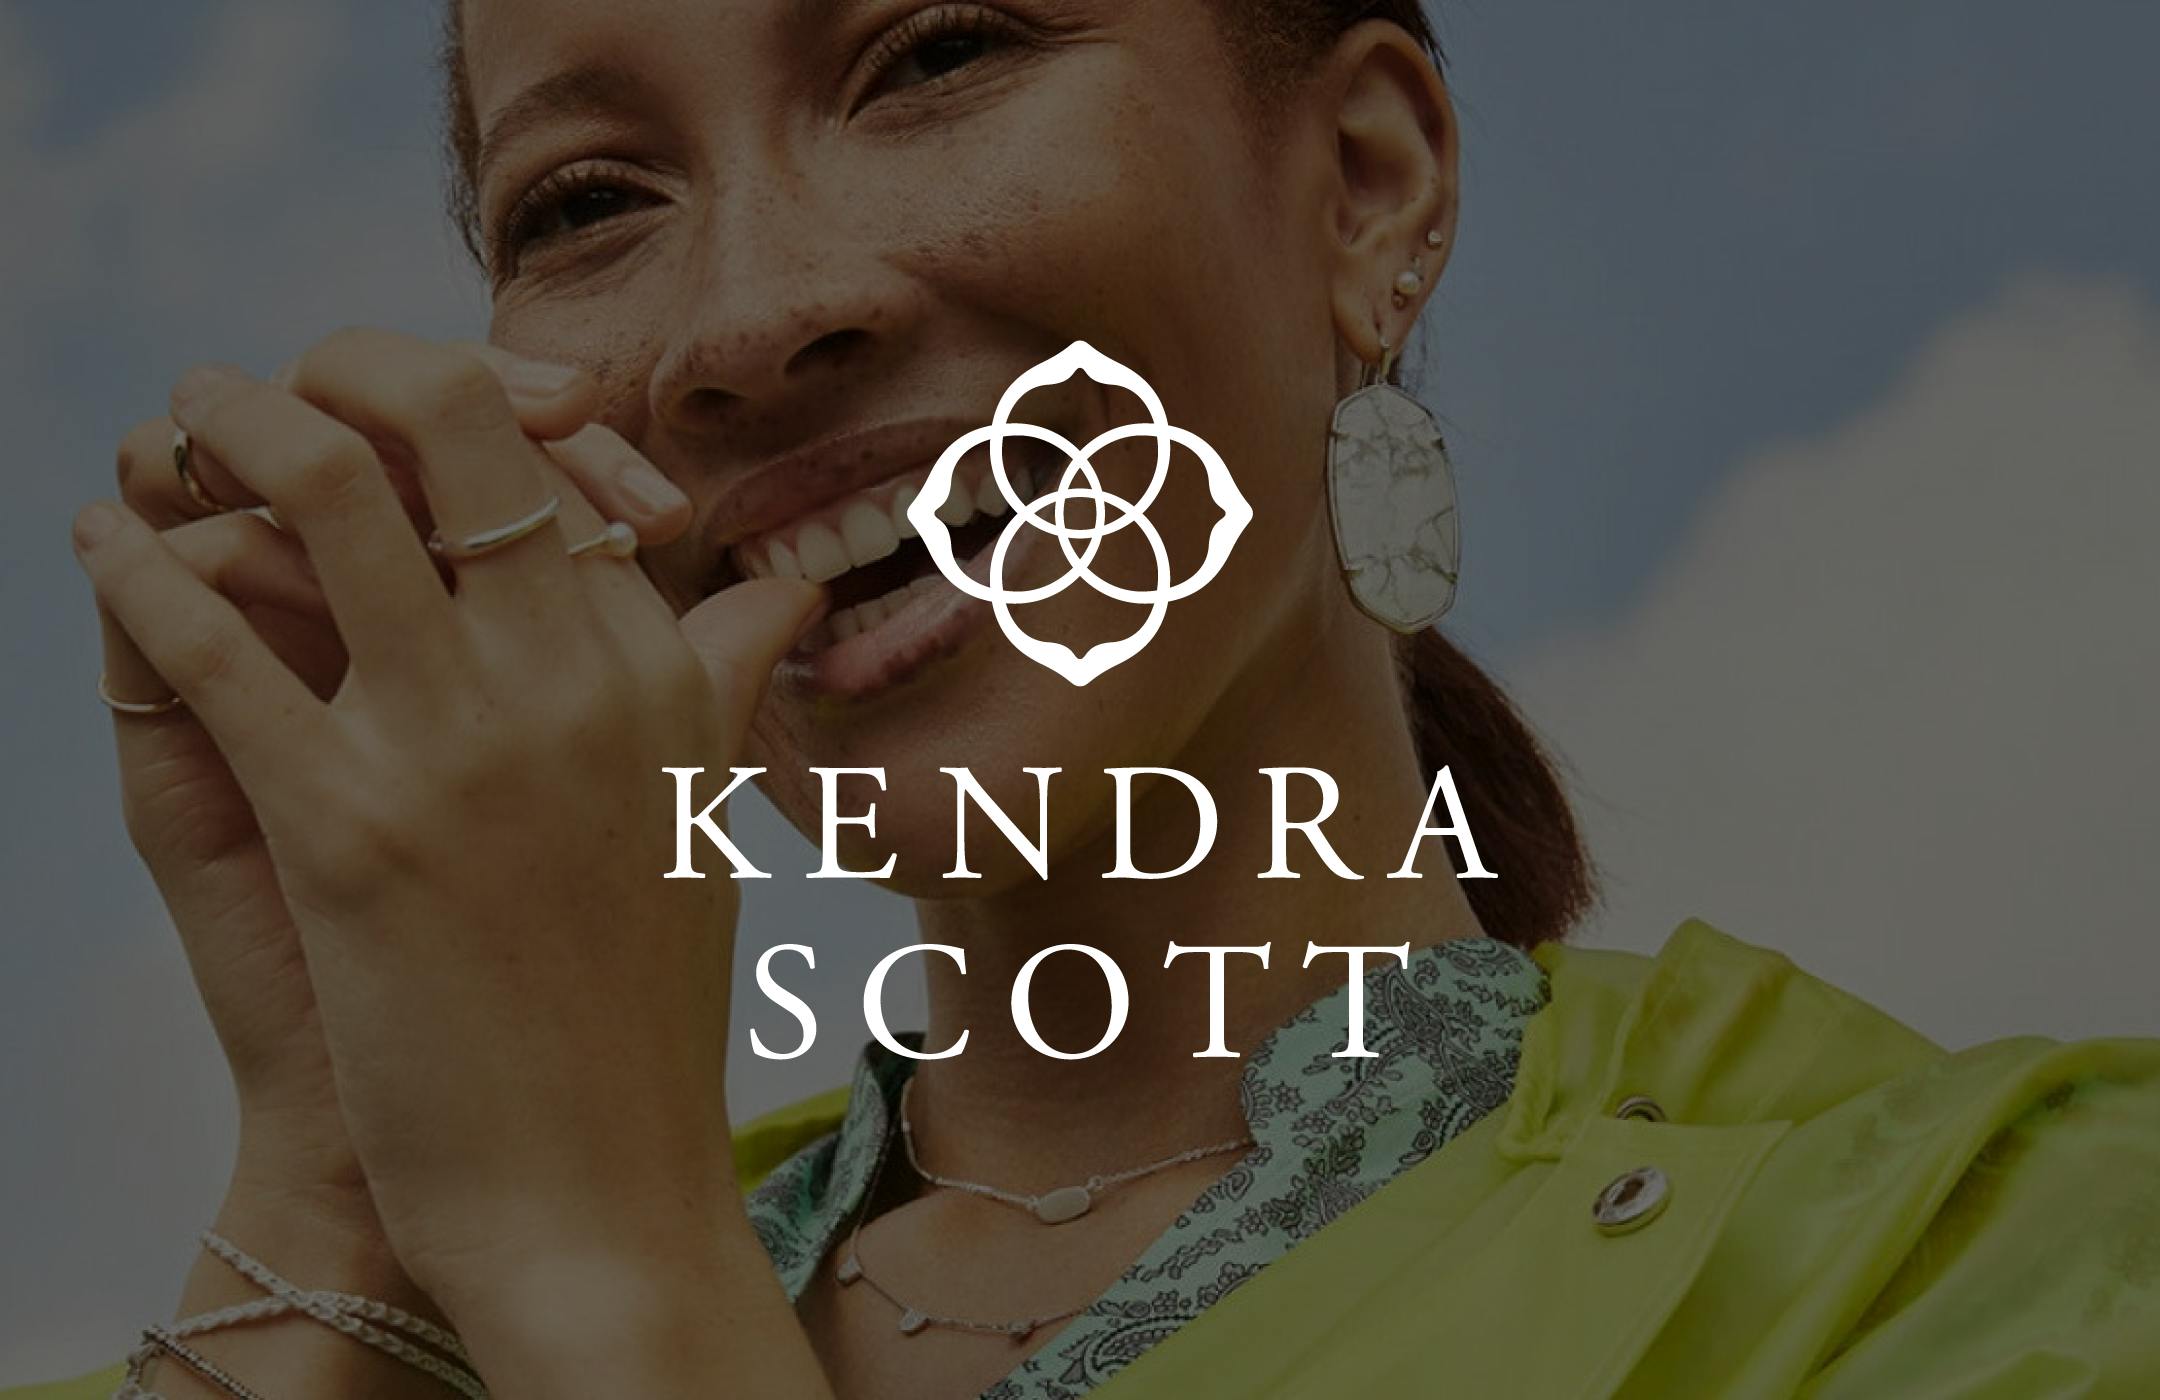 Kendra Scott logo overlaid an image of a woman wearing jewelry